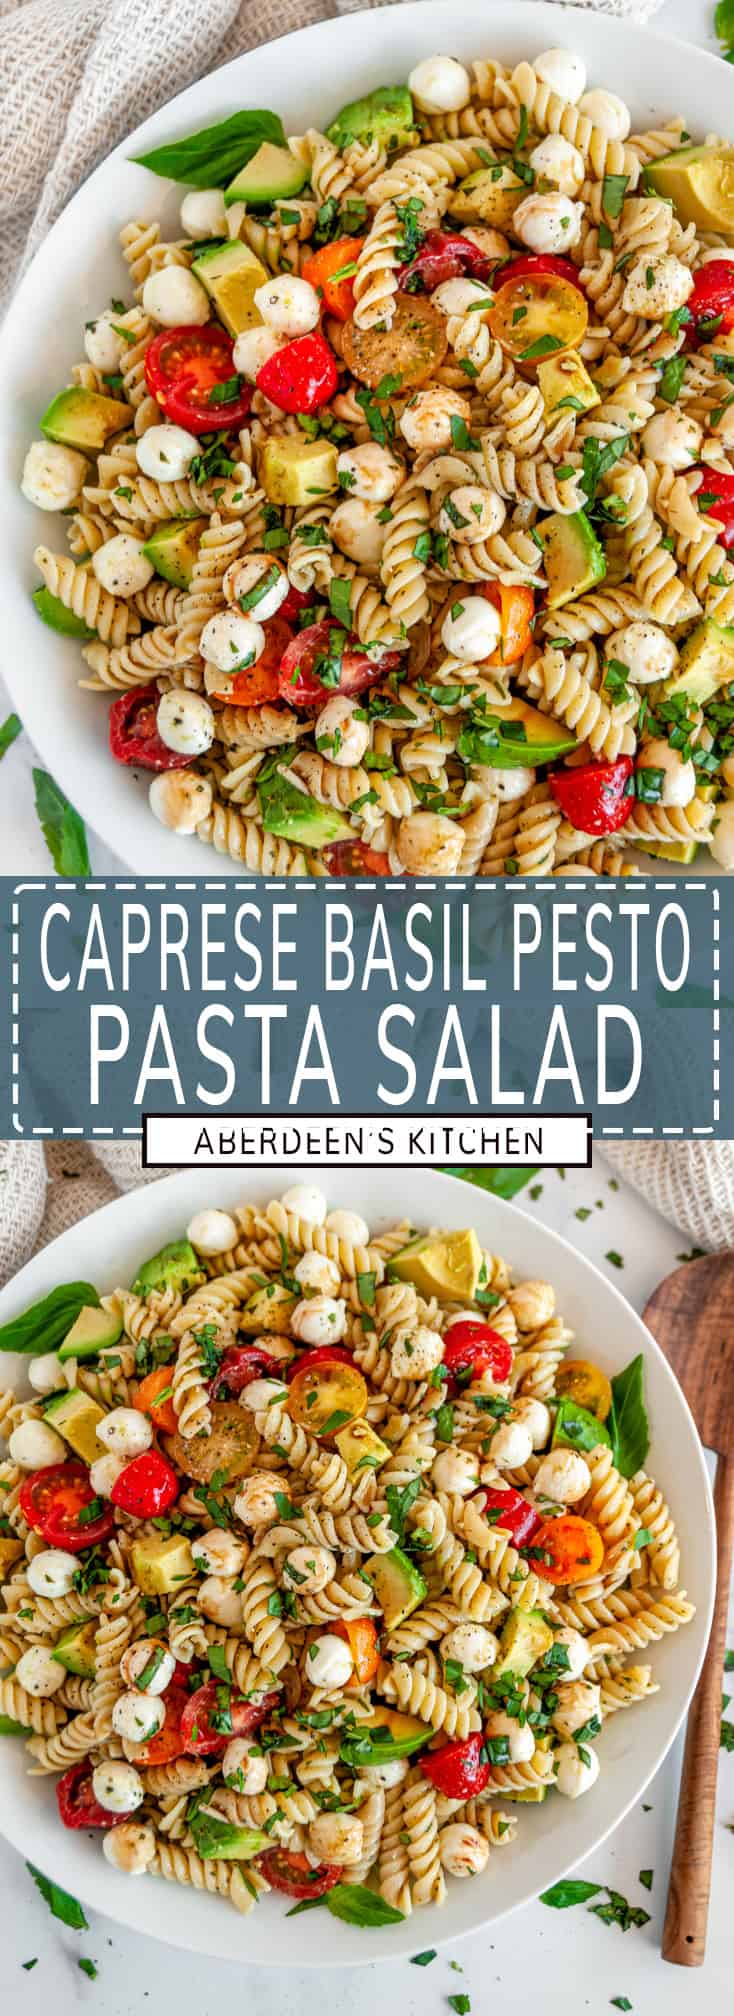 Caprese Pesto Pasta Salad - Aberdeen's Kitchen